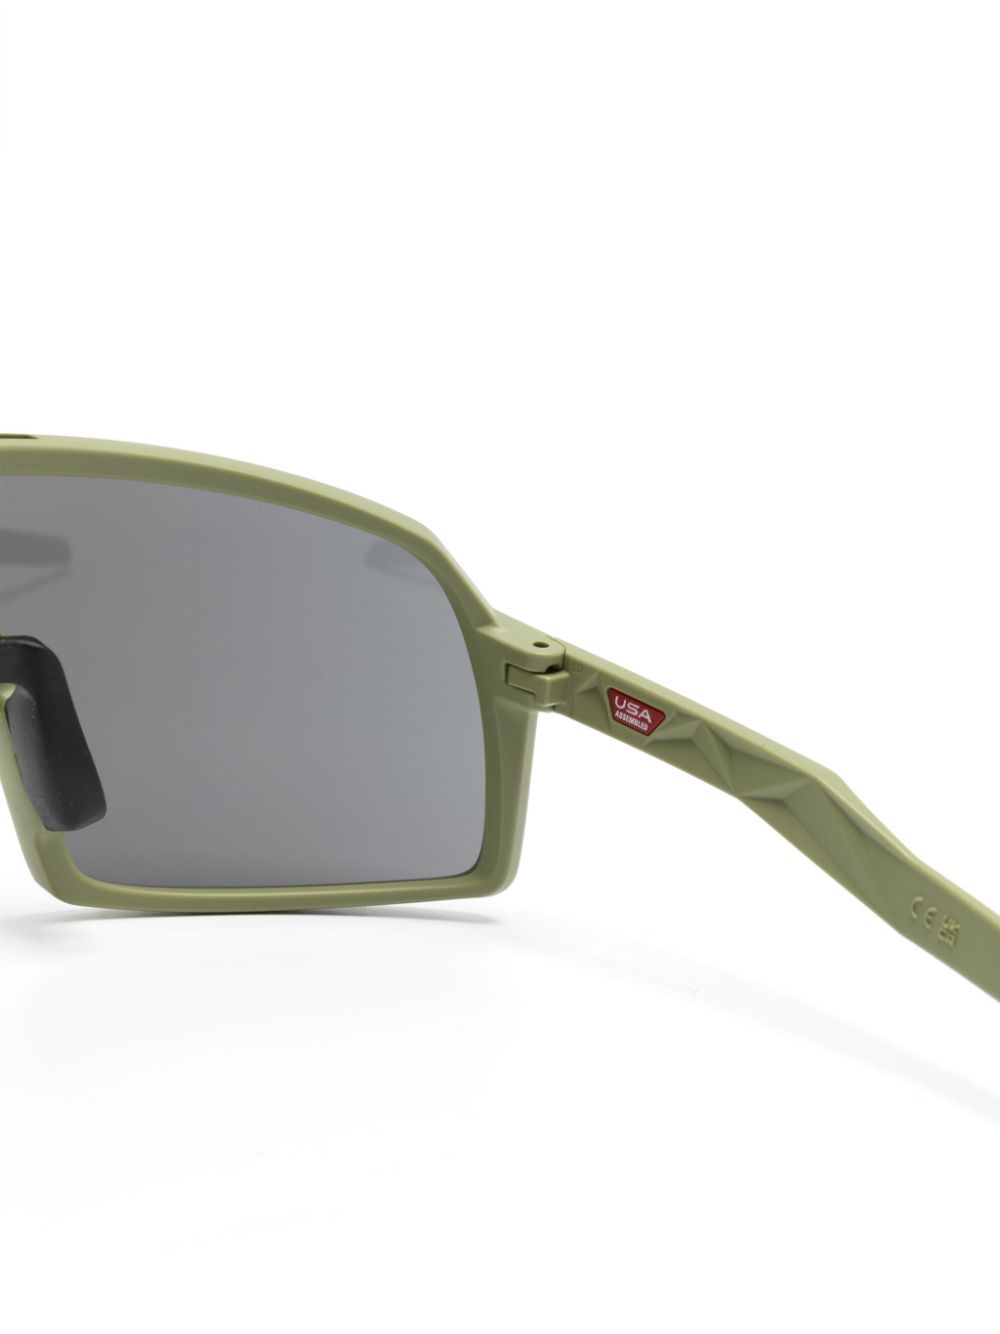 Sutro S shield-frame sunglasses<BR/><BR/><BR/>